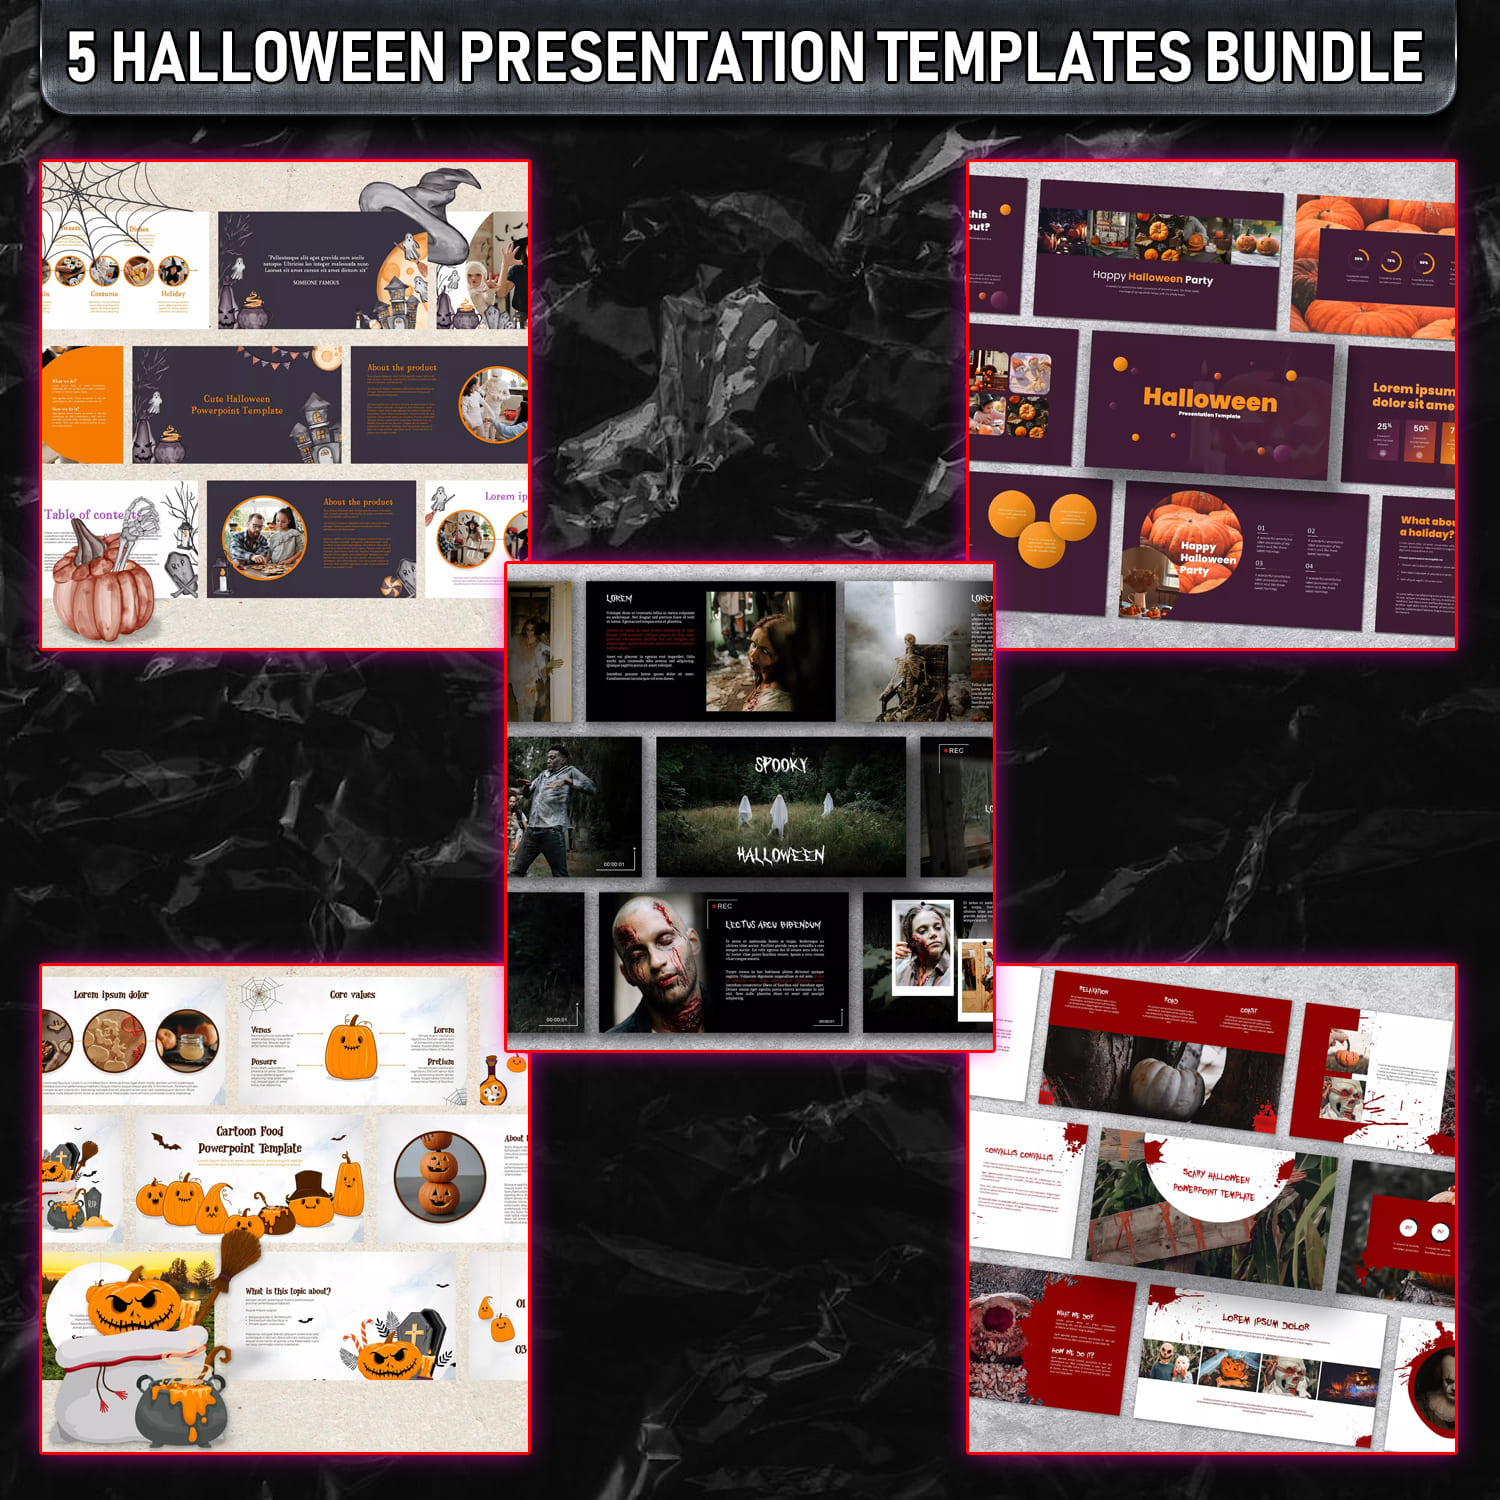 Halloween Presentation Powerpoint Templates Bundle cover image.